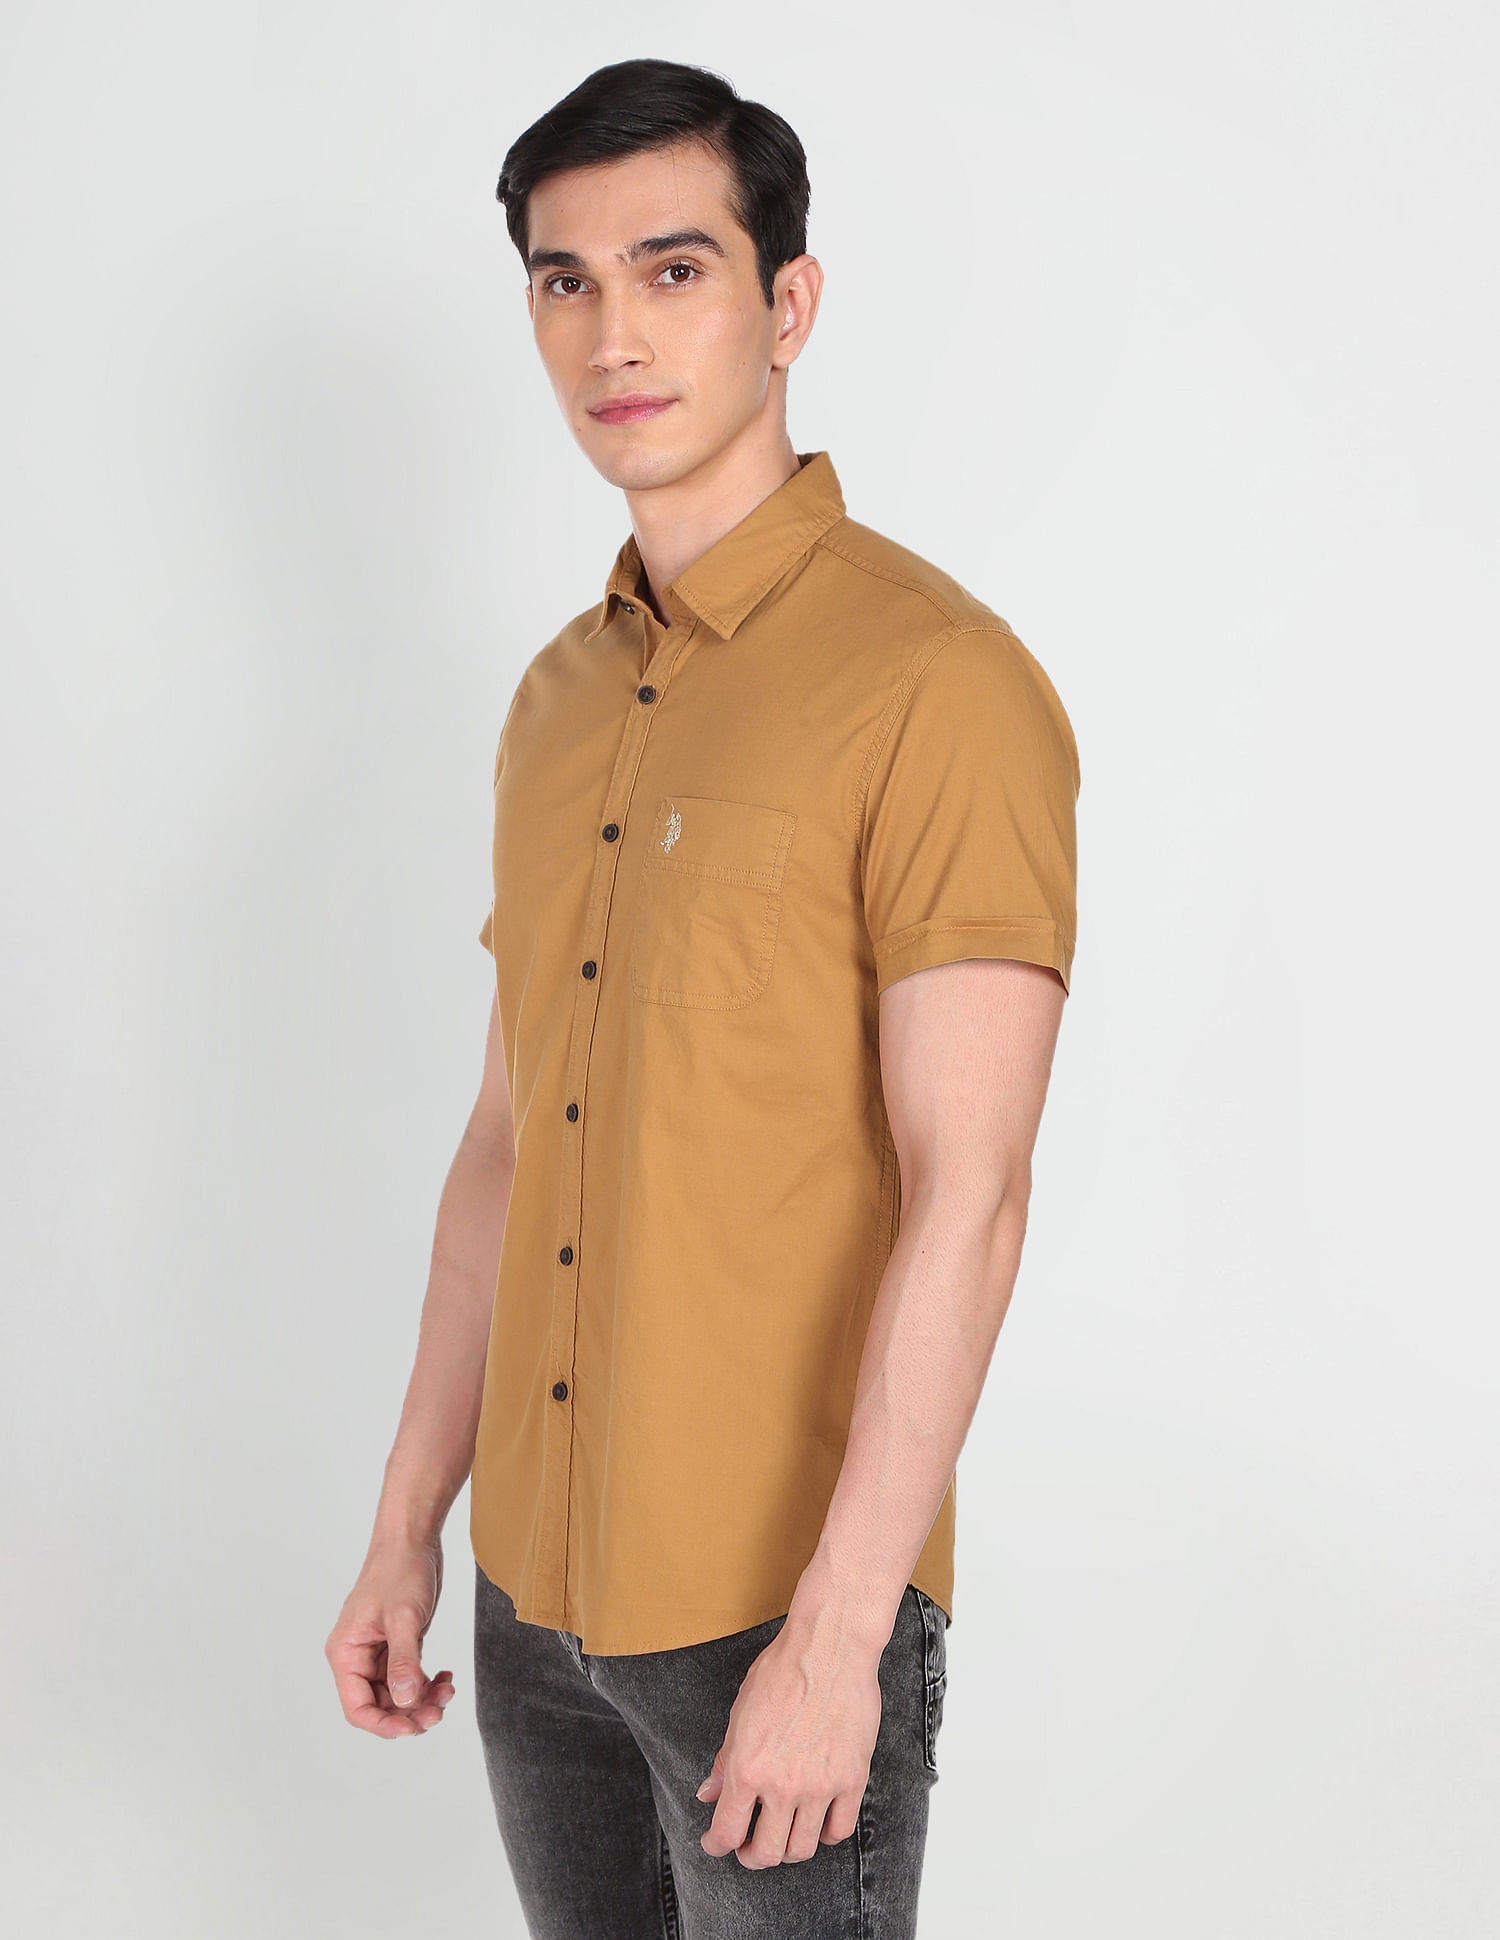 vintage men's shirt Carhartt brown made in mexico 100% Cotton | eBay